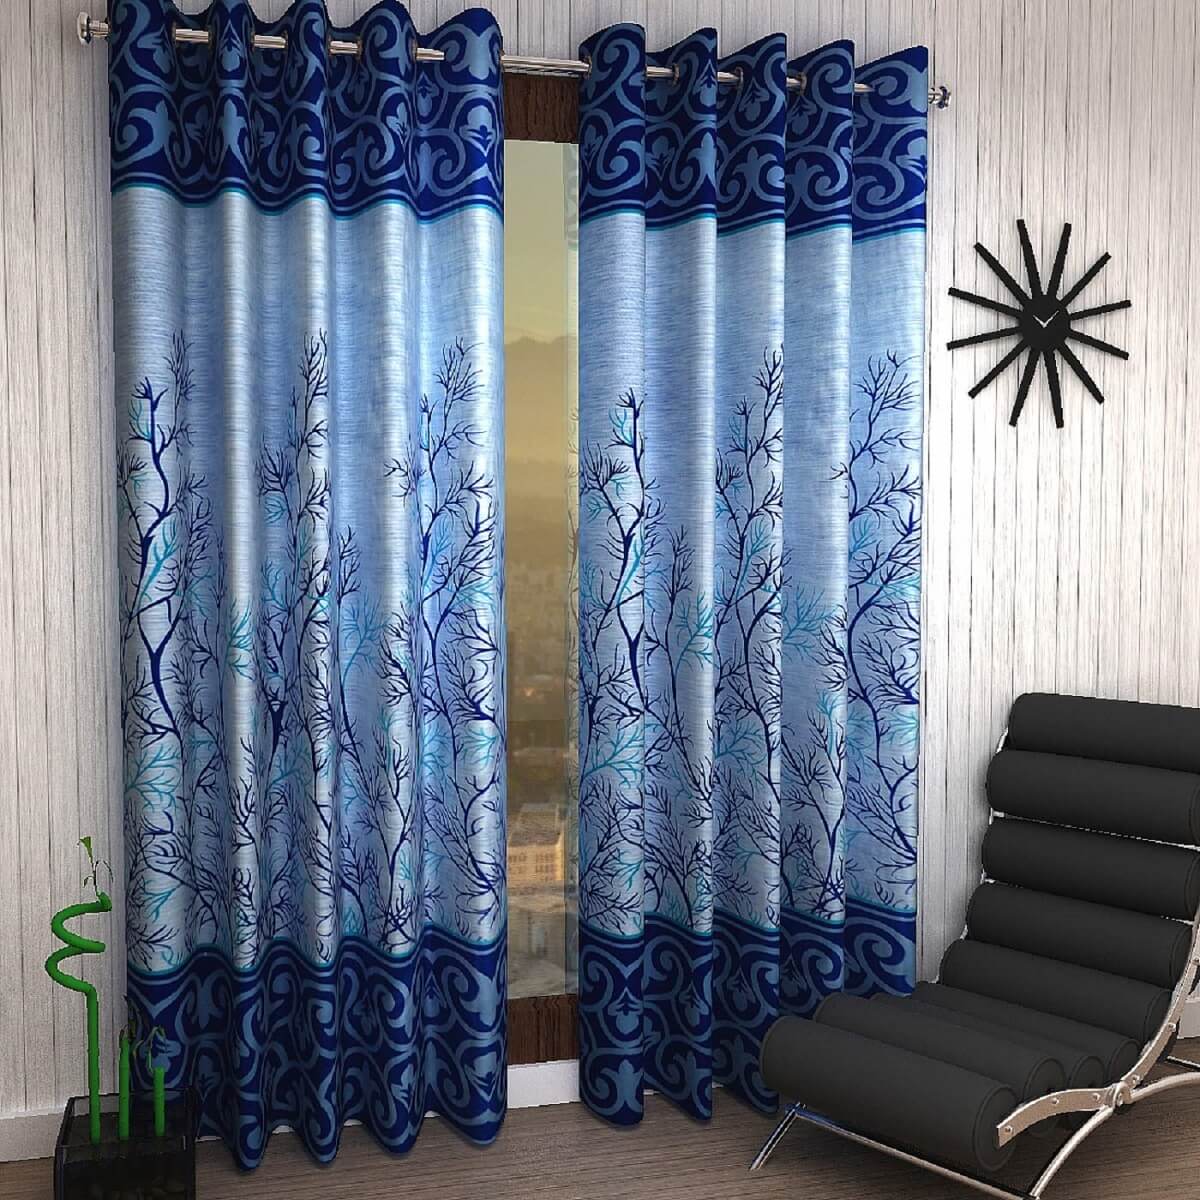 New Curtain Design 2021 In Sri Lanka | www.myfamilyliving.com